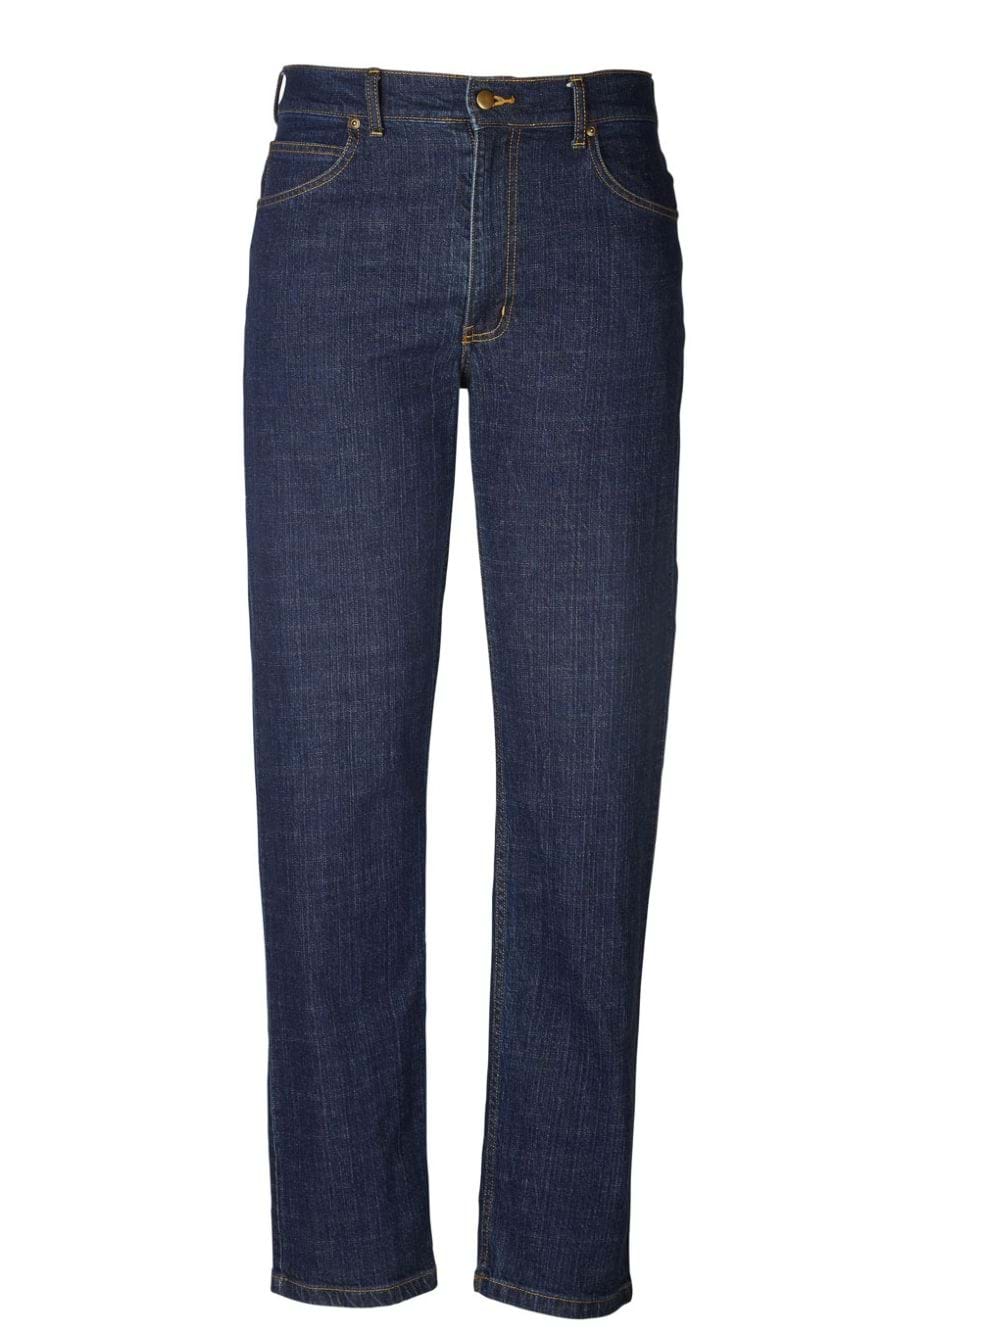 Ladies Stretch Denim Jeans - Indigo